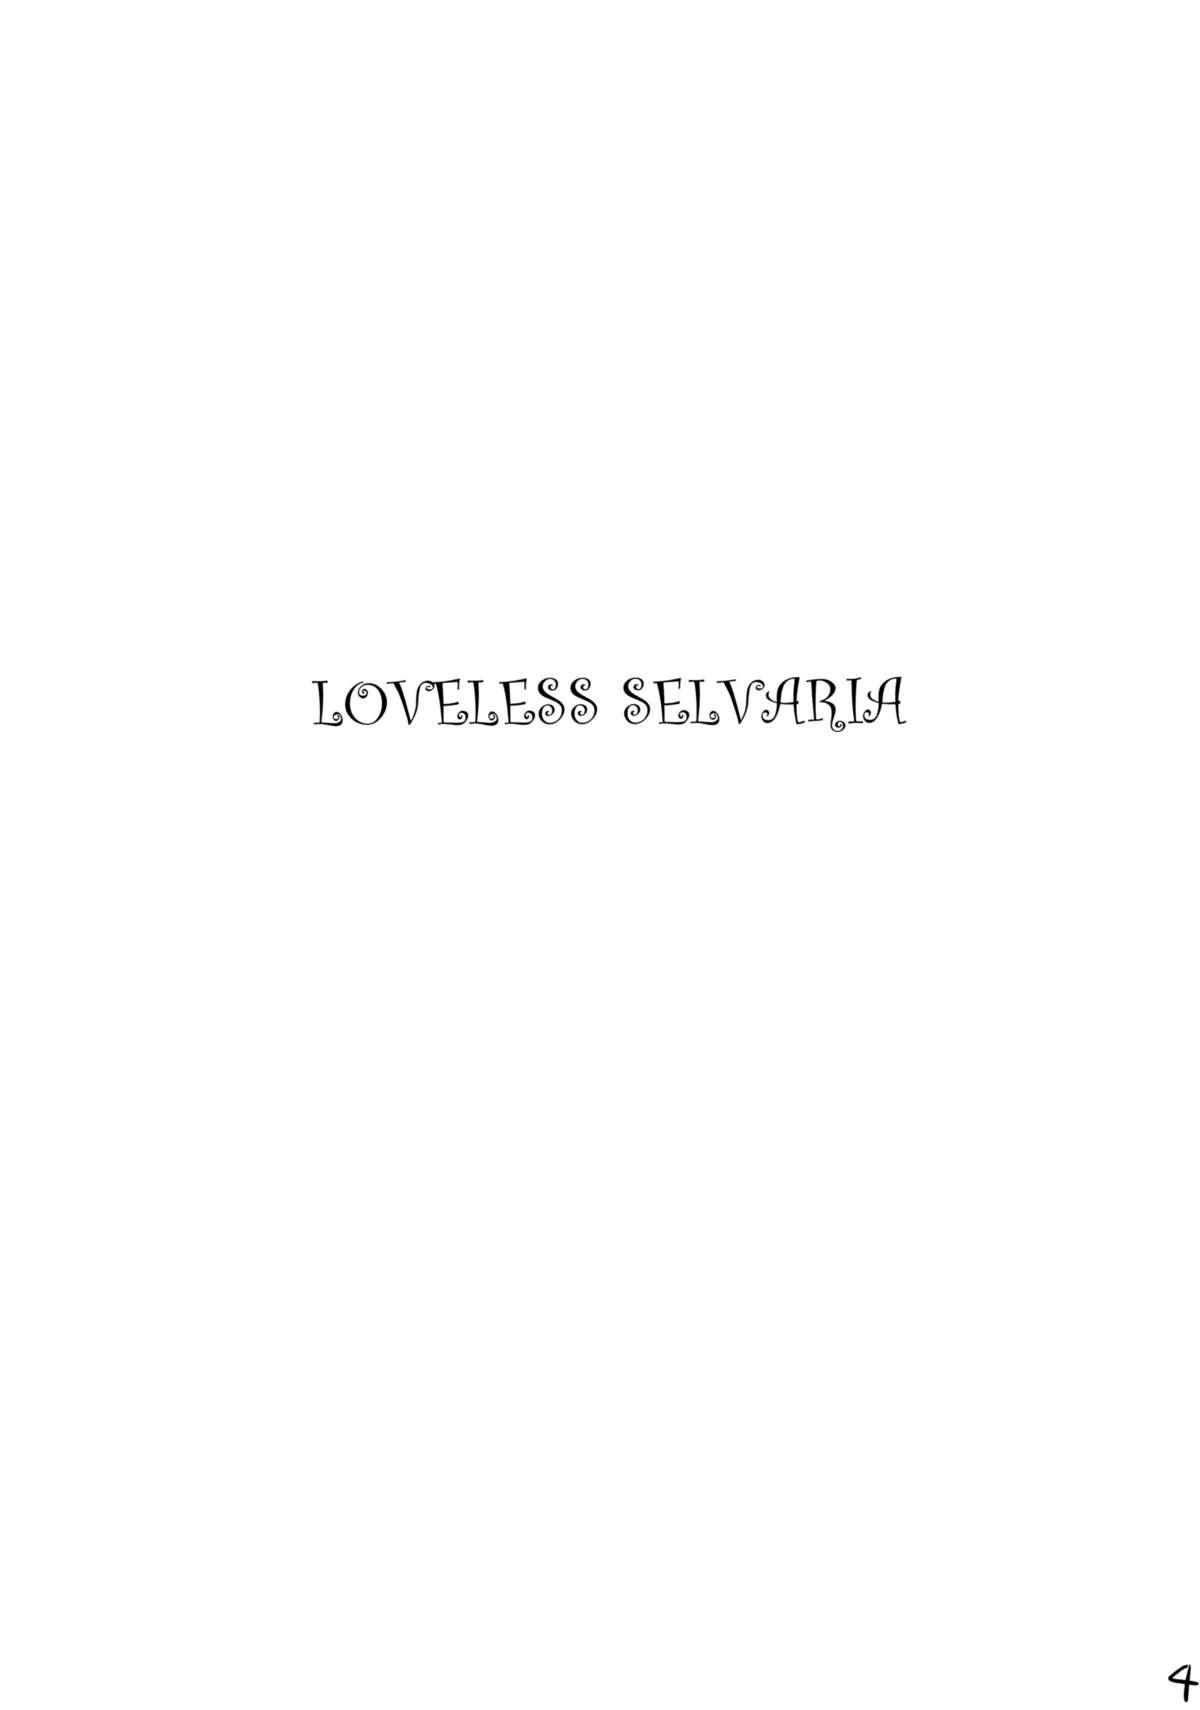 Sexy Whores Loveless Selvaria - Valkyria chronicles Plug - Page 3